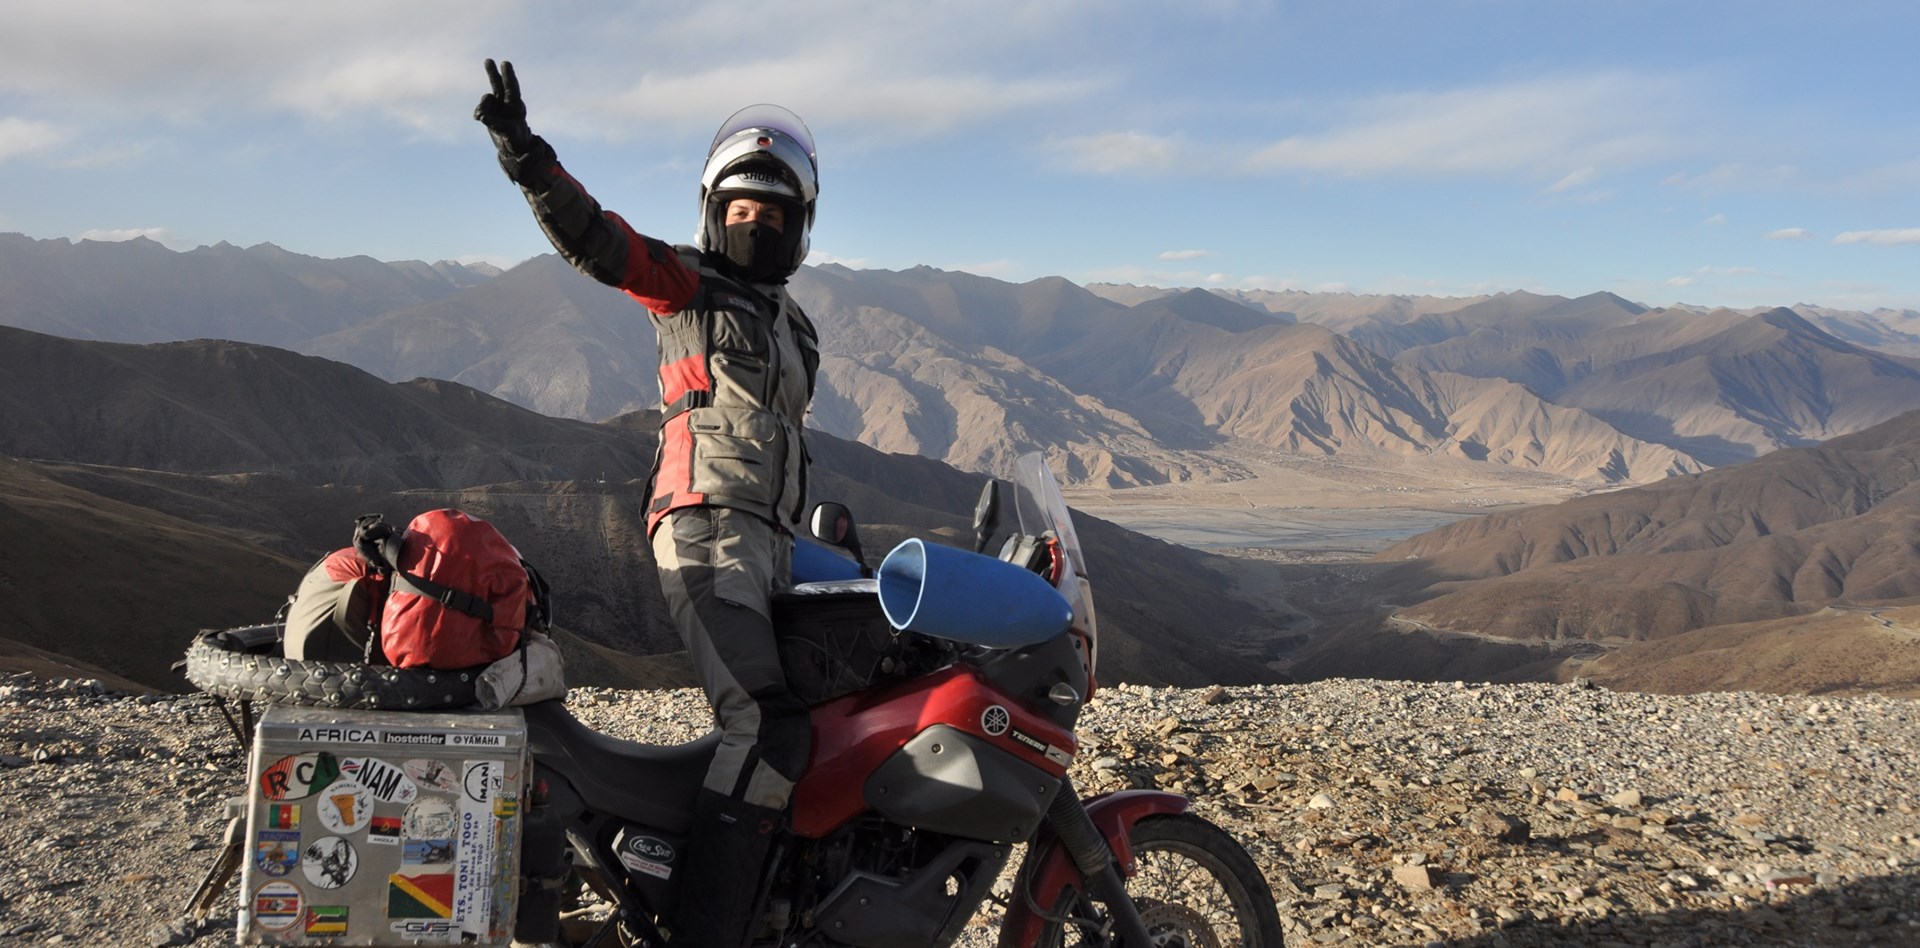 Self Drive Tour over Tibet and along Silk Road through China to Kyrgyzstan